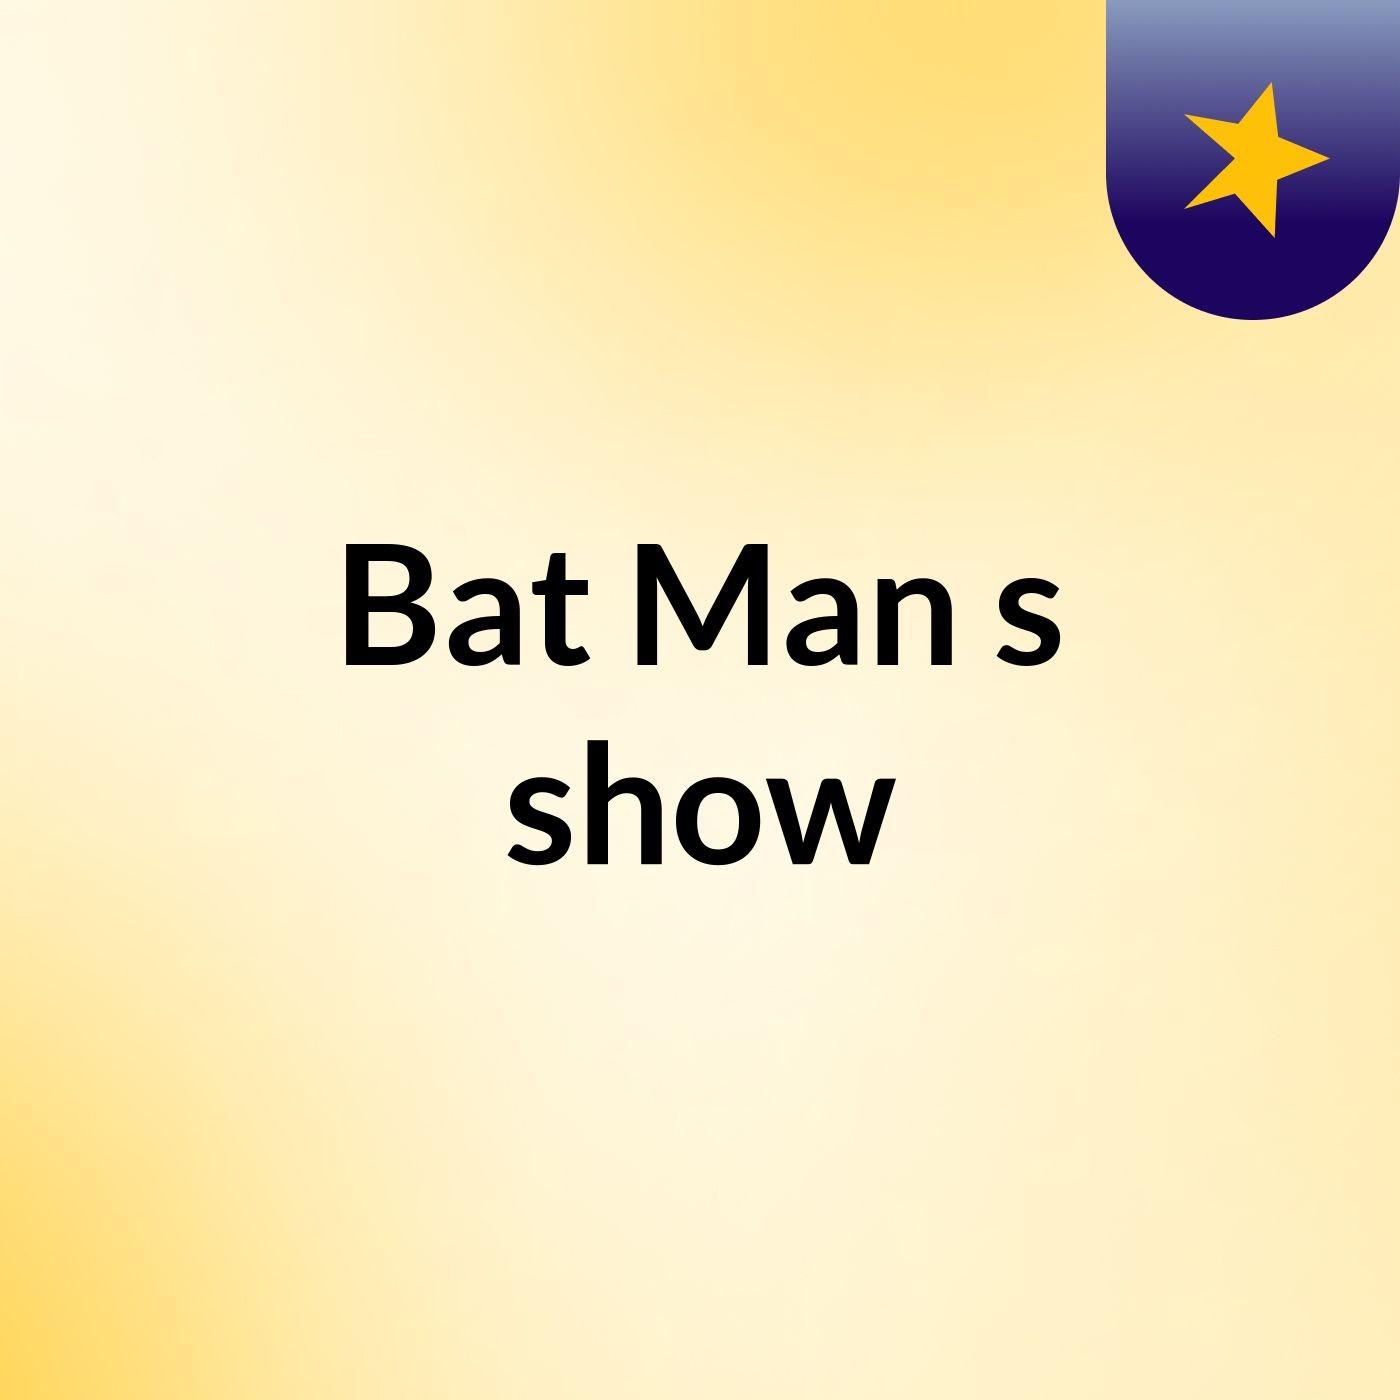 Bat Man's show